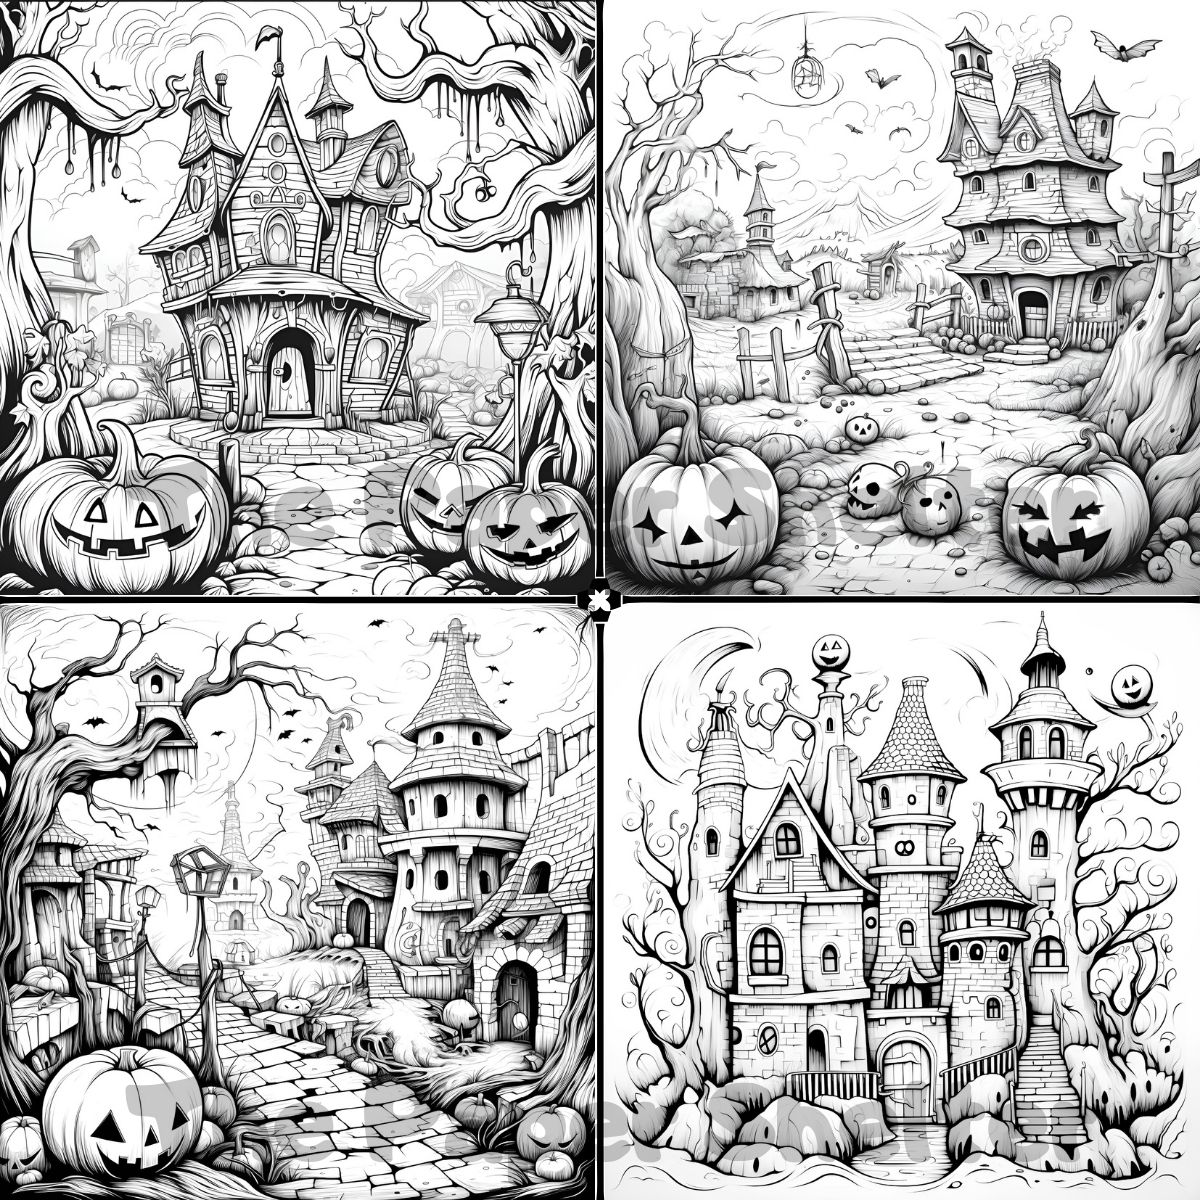 Halloween Castle Scenes - Digital Coloring Book - Click Image to Close